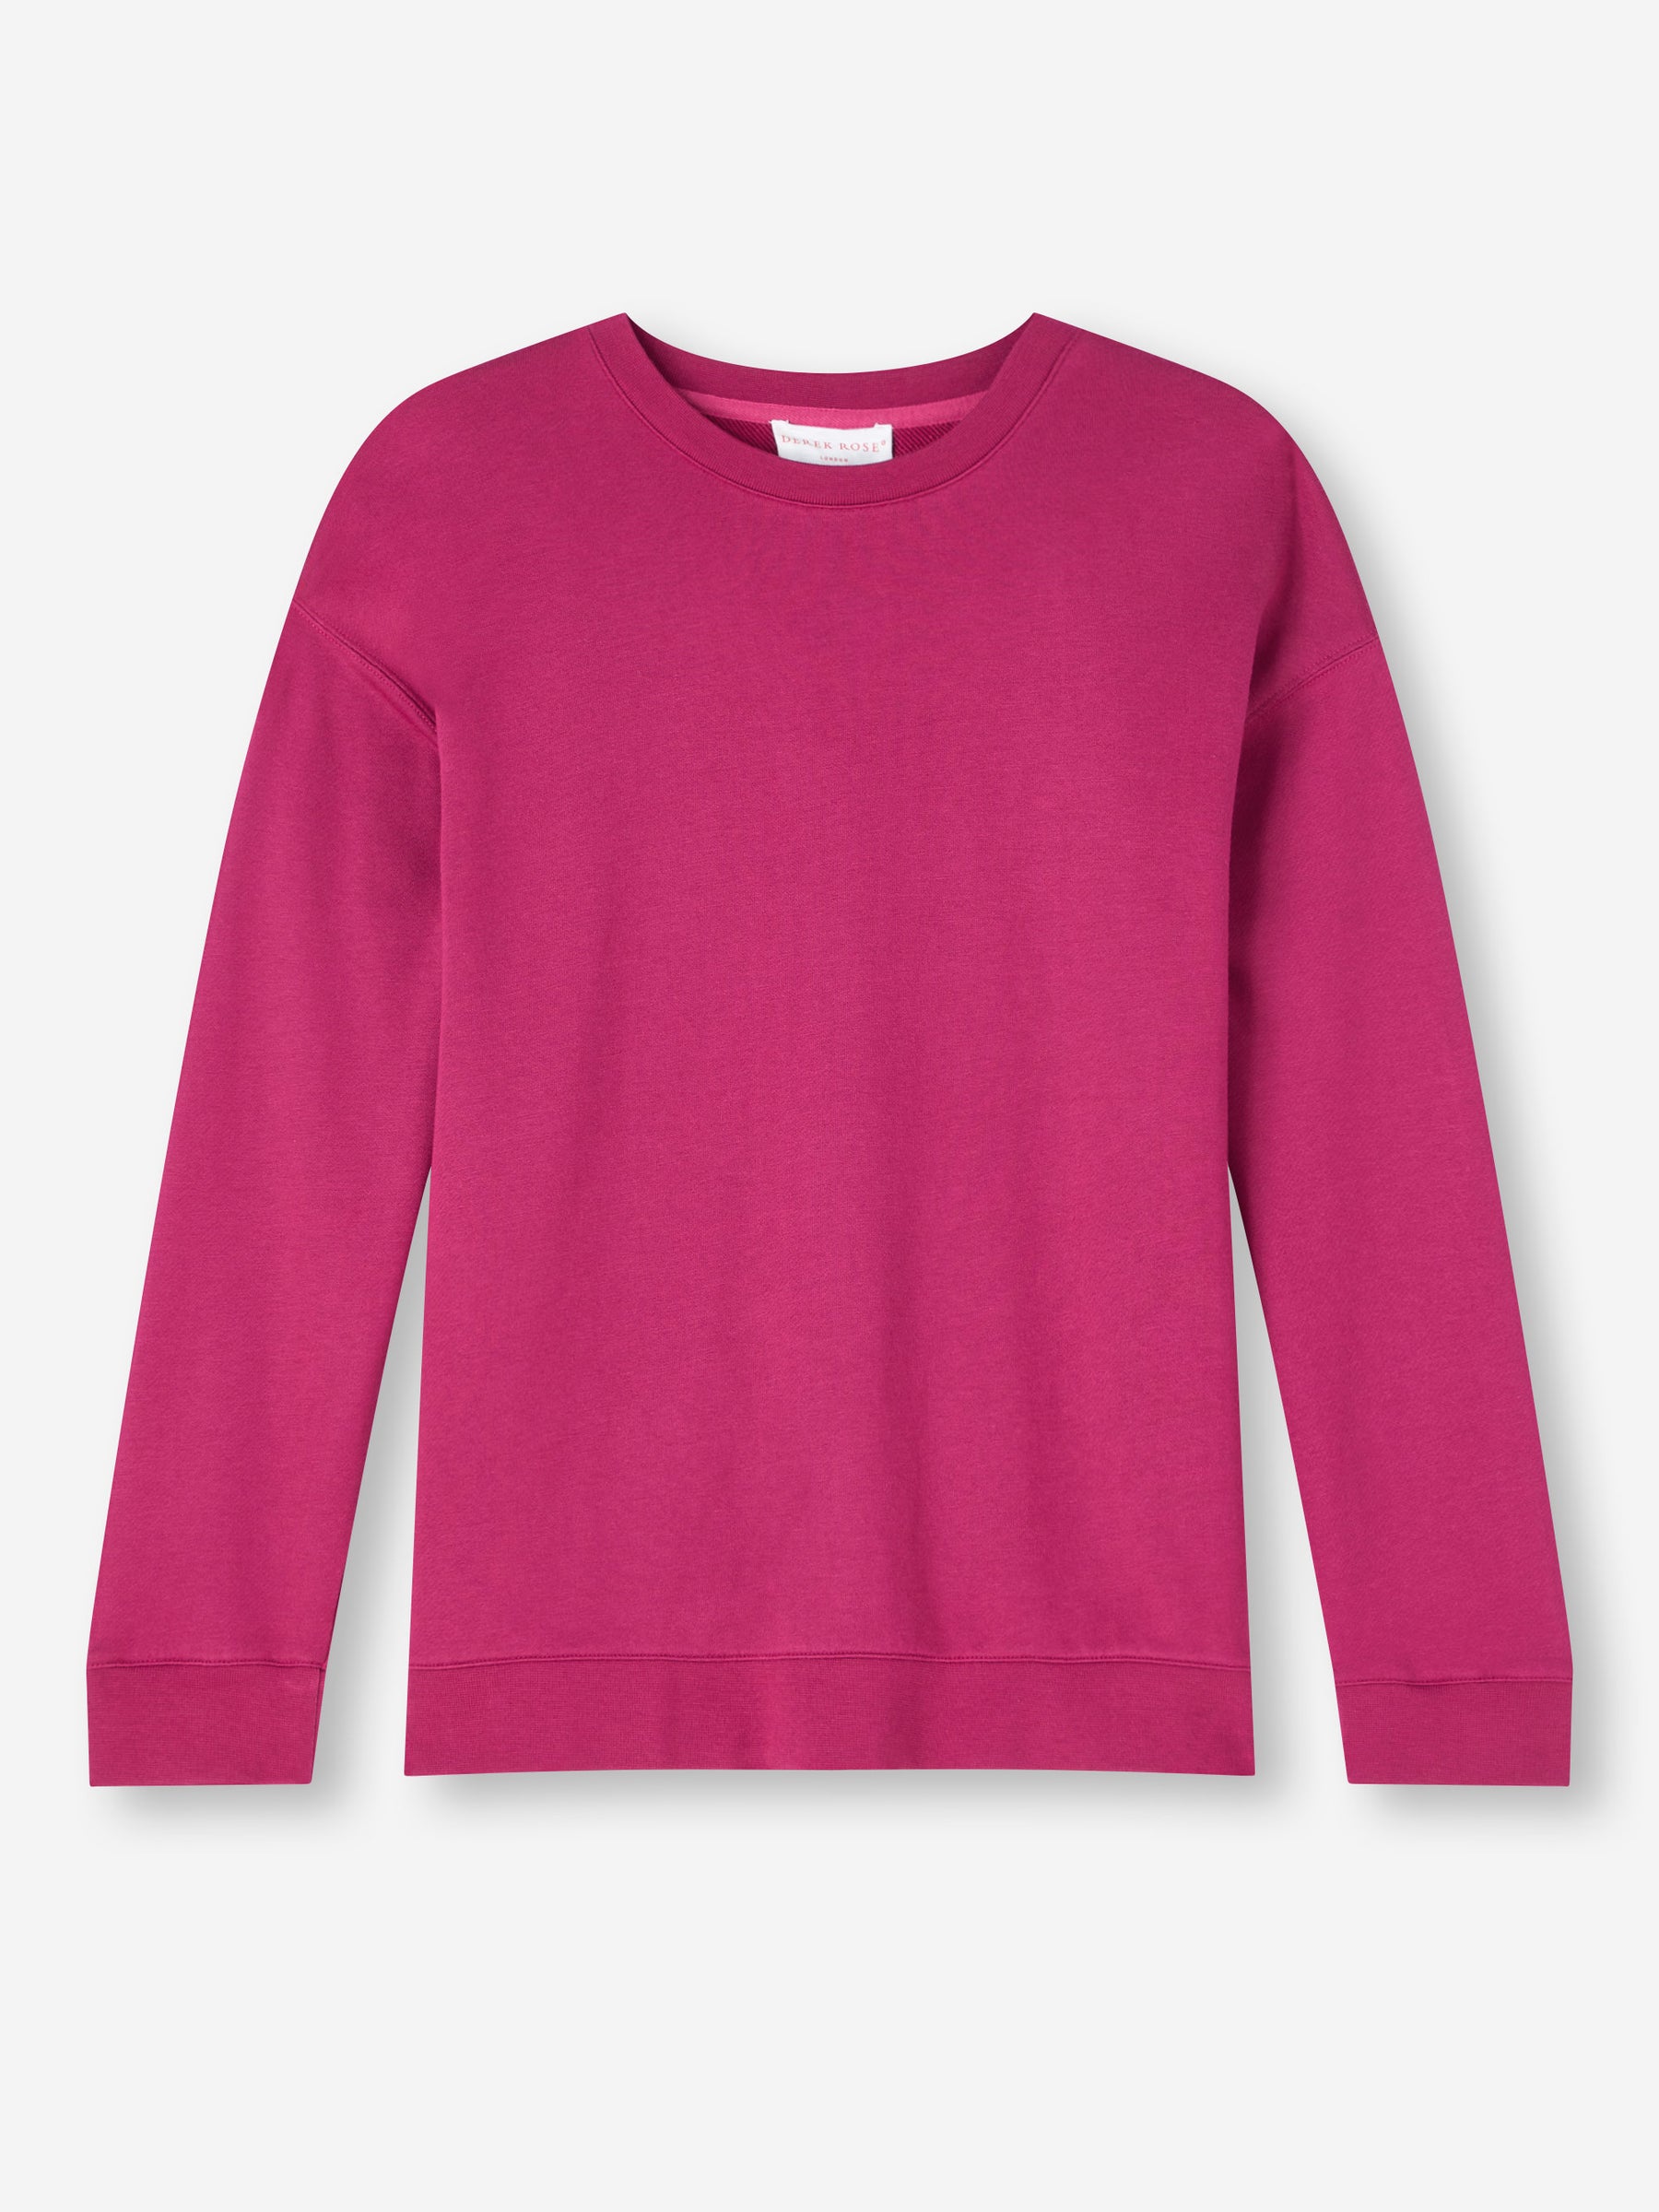 Women's Sweatshirt Quinn Cotton Modal Stretch Berry